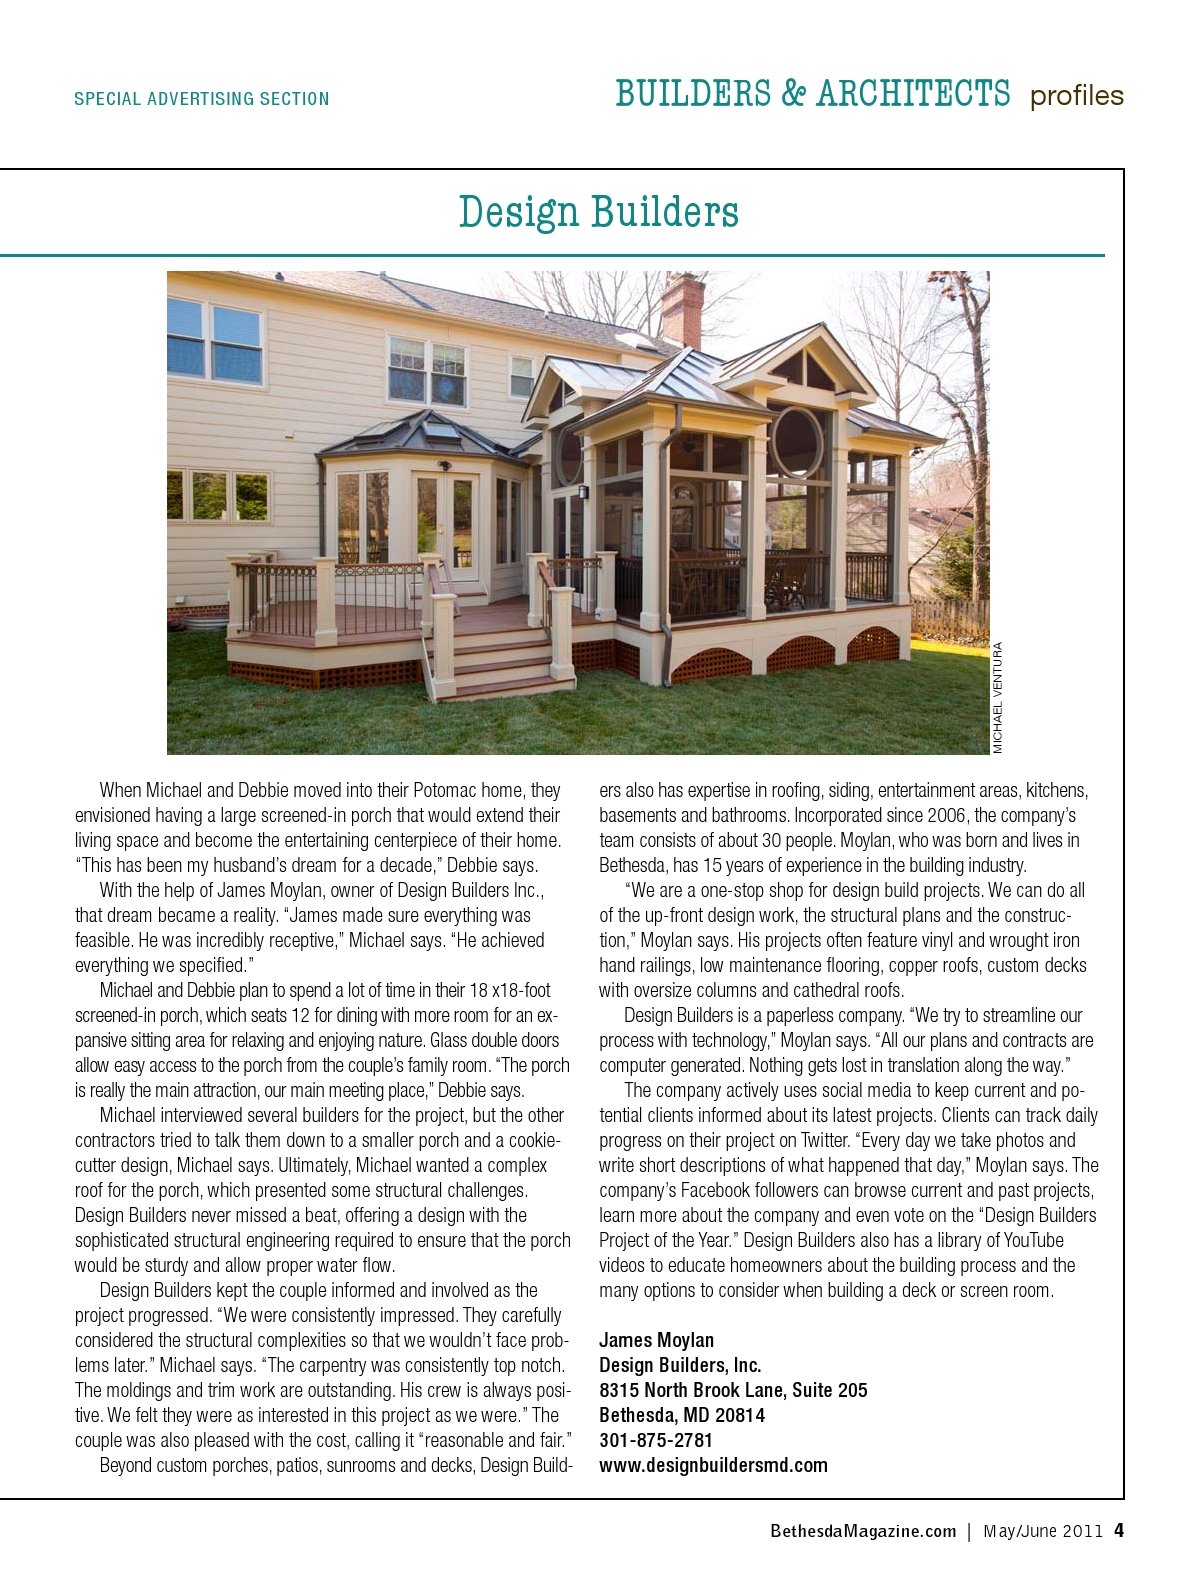 Bethesda_Magazine_Design_Builders_2